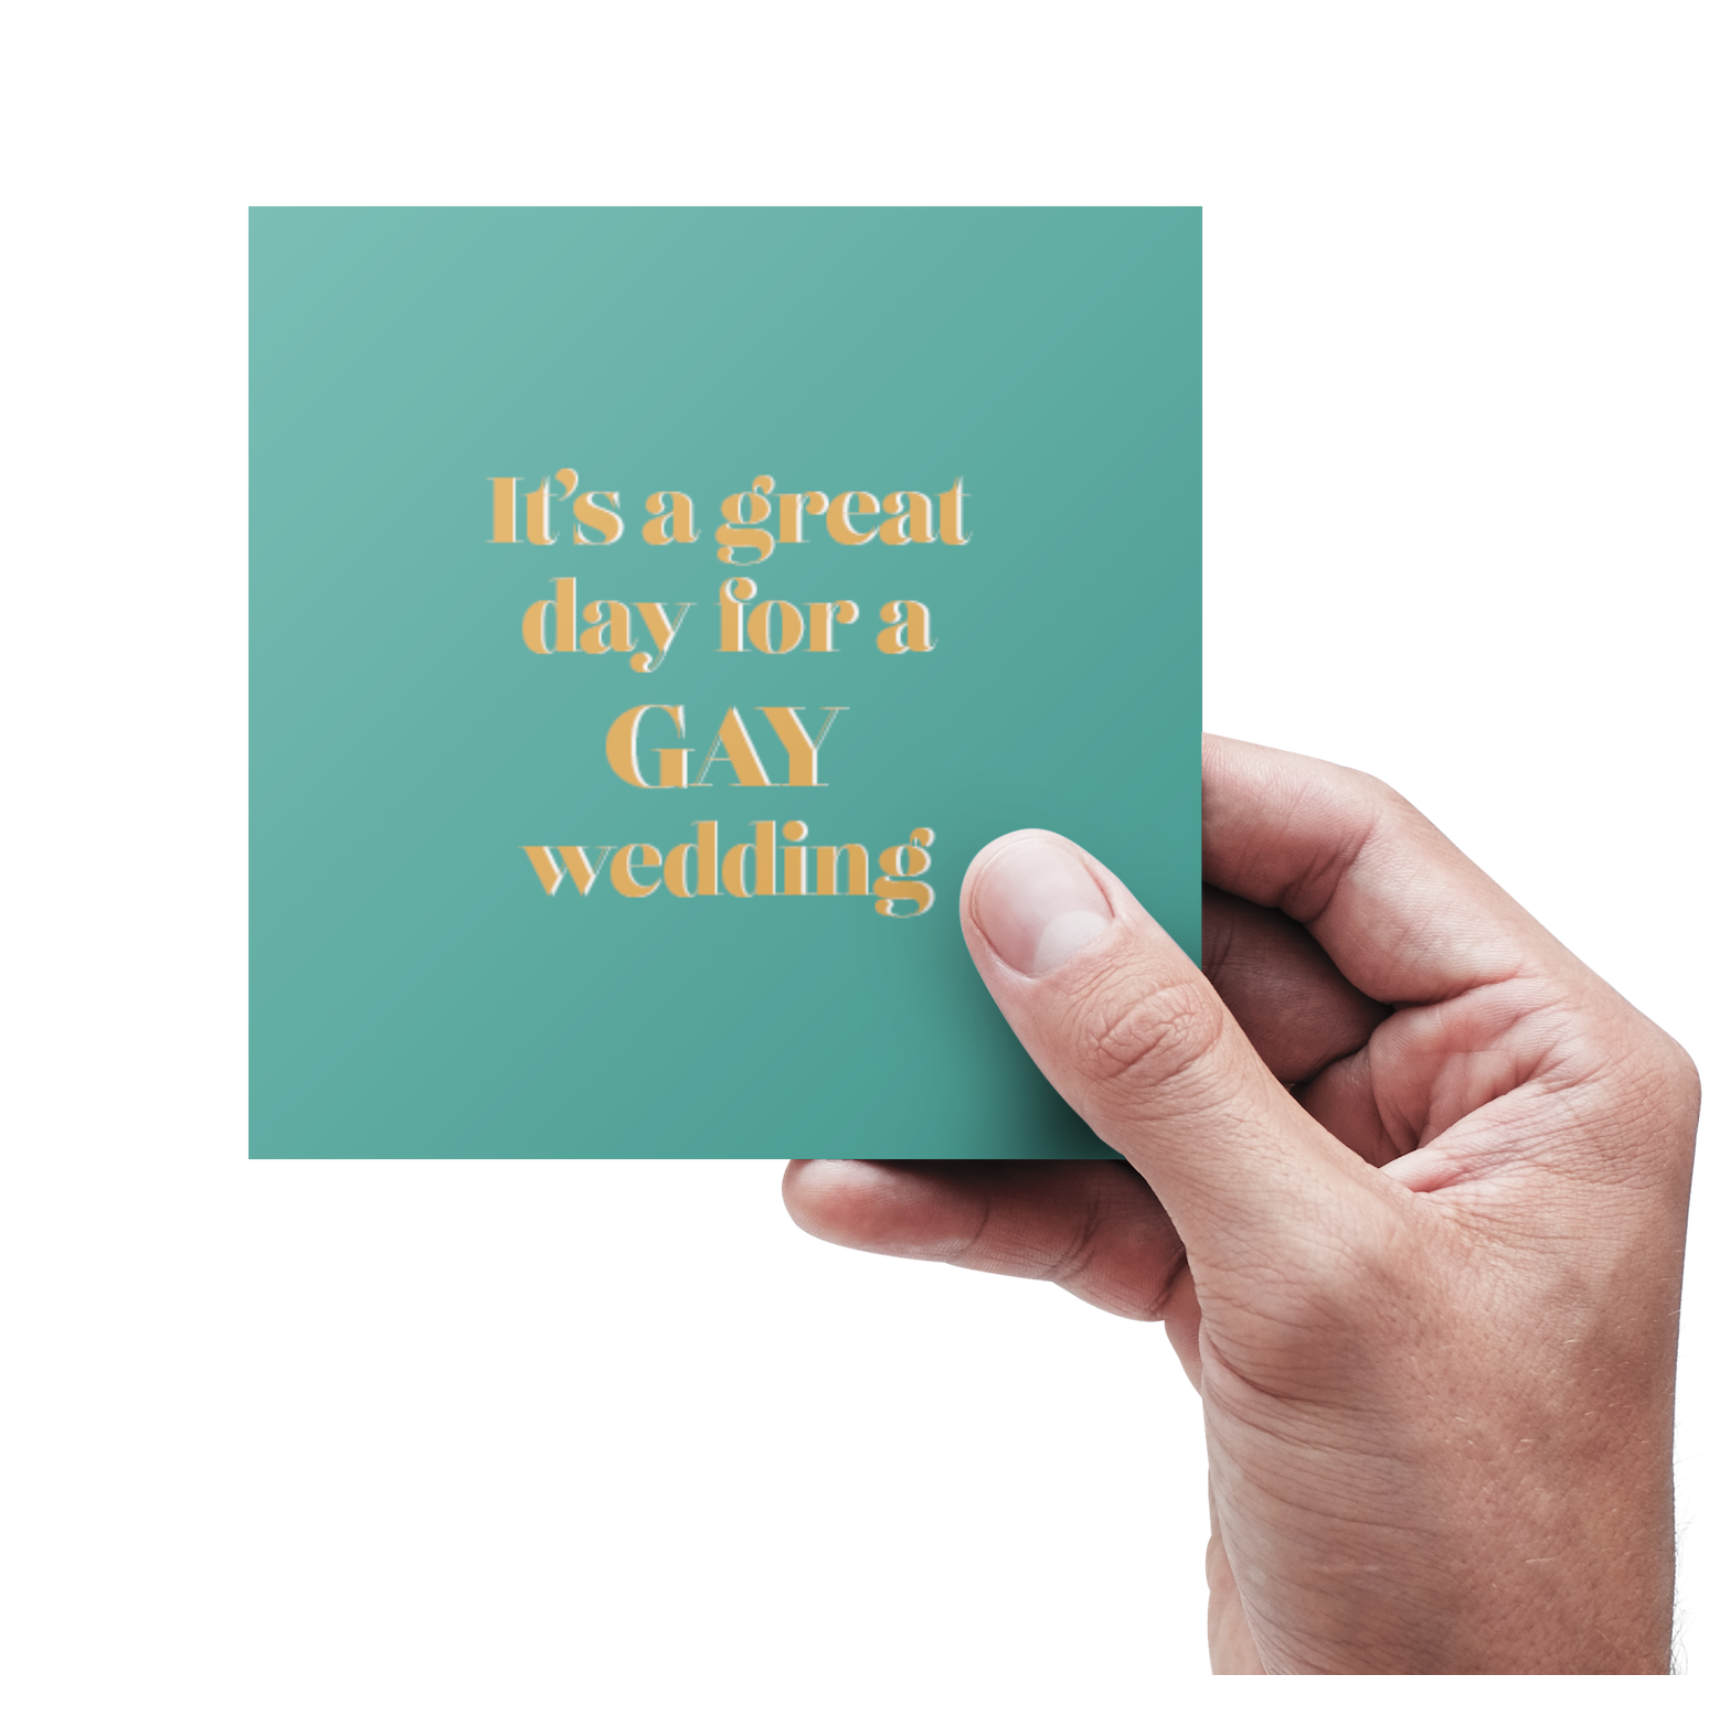 It´sa great day - Wedding card